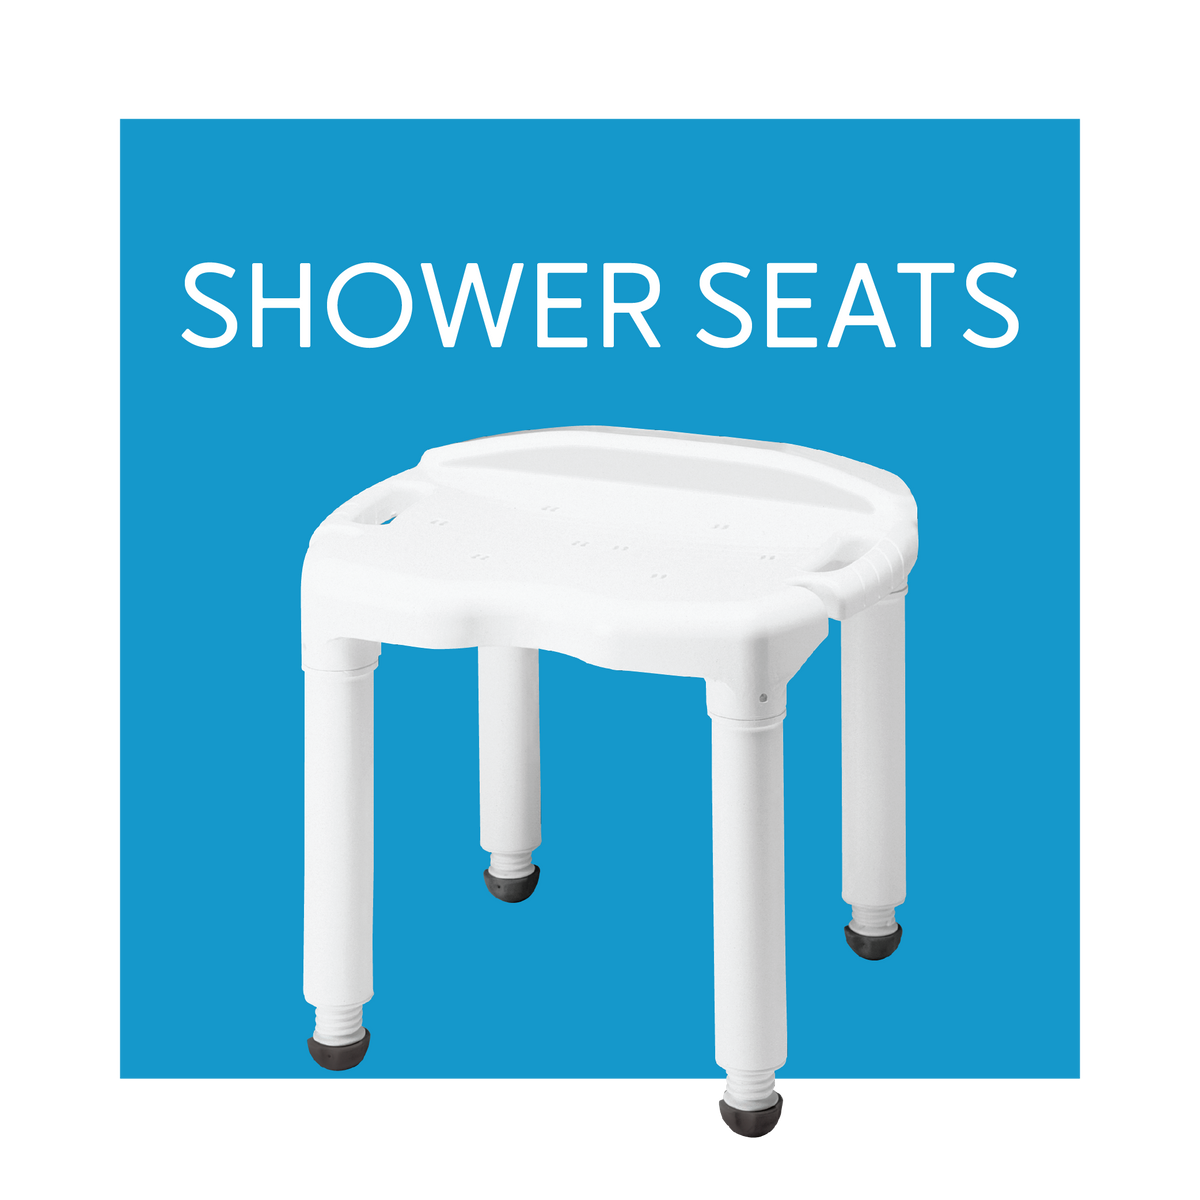 Shower seats